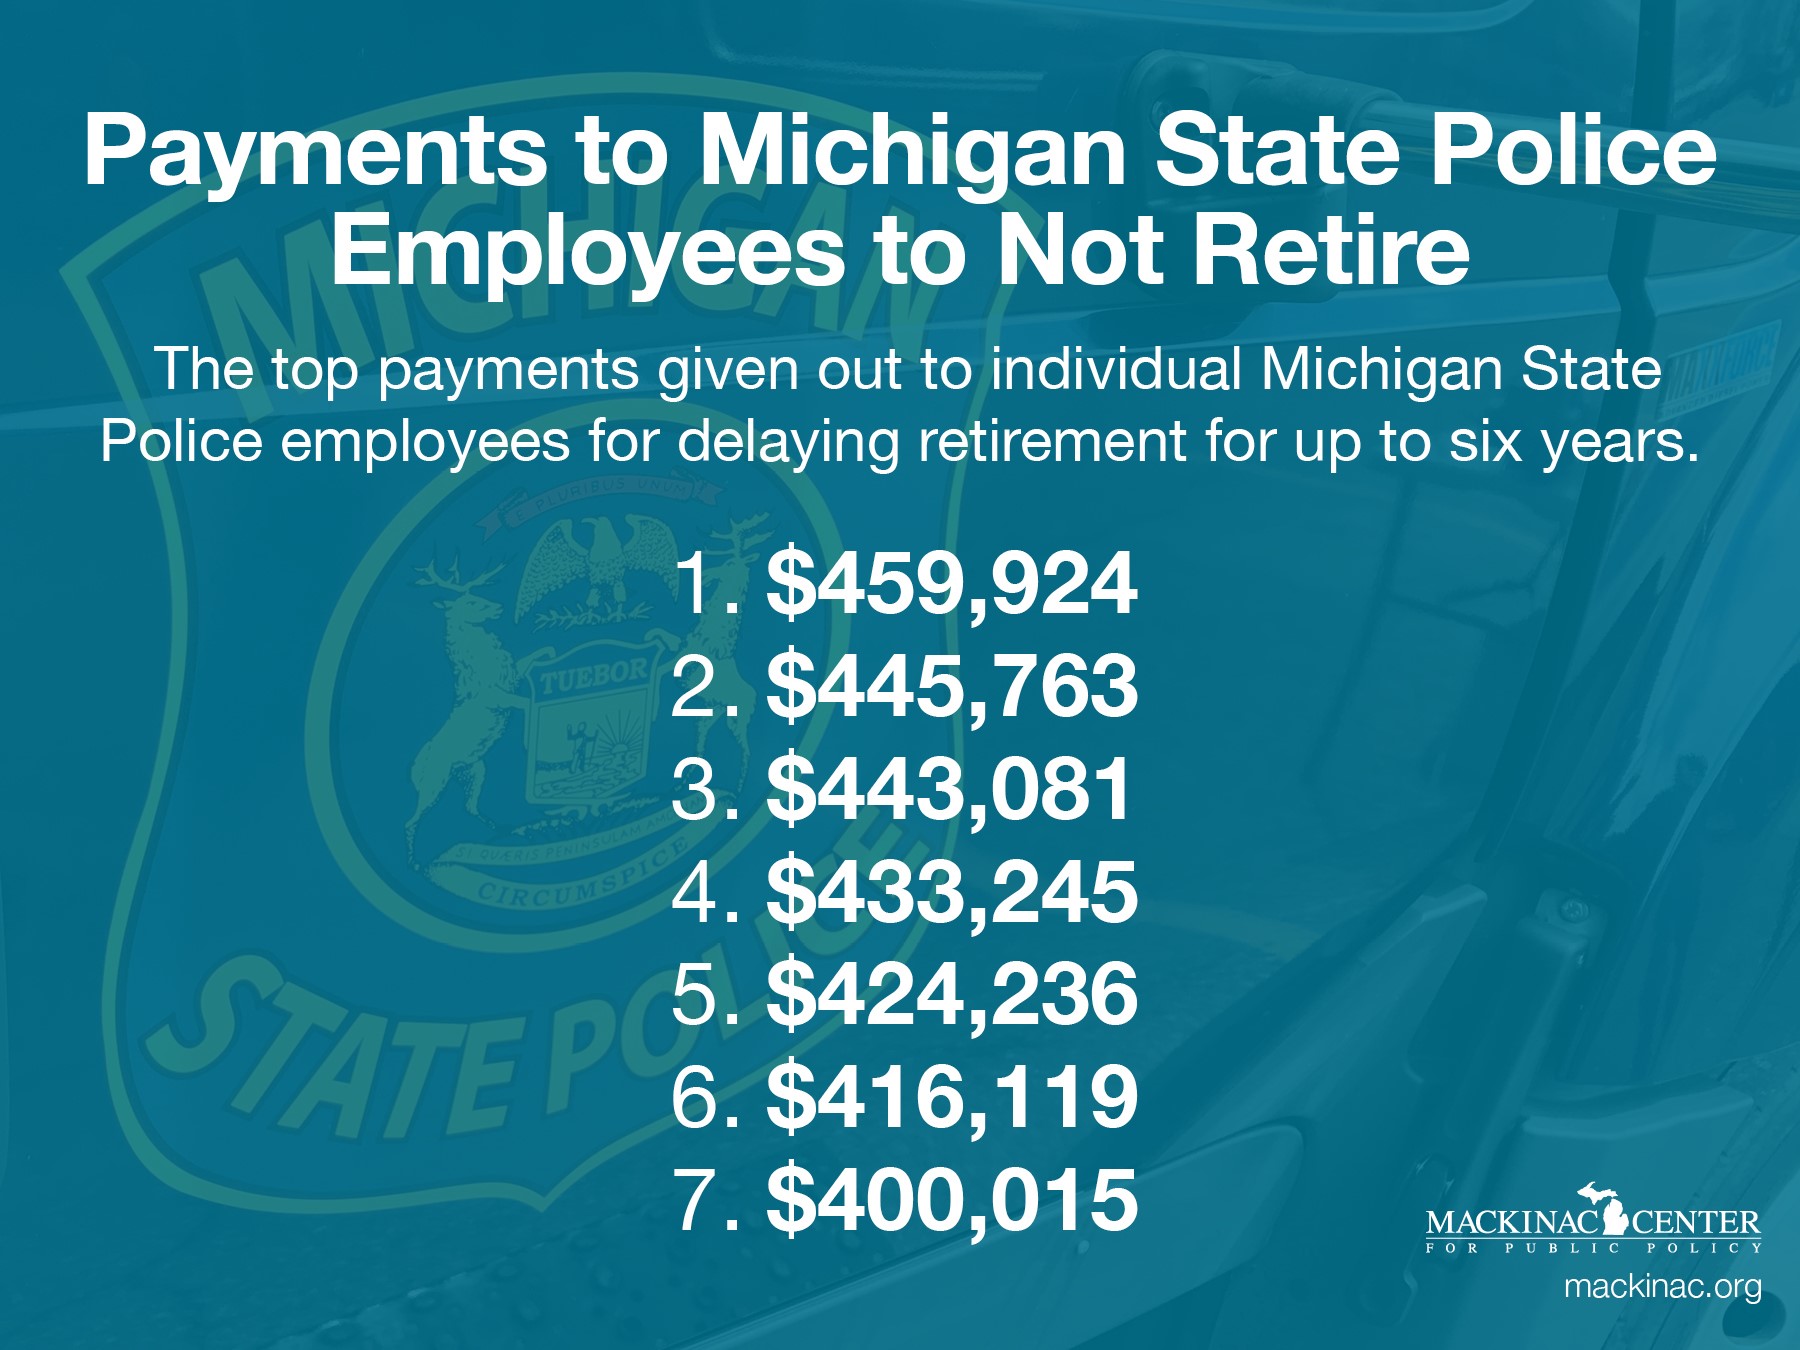 Employee Record Retention Chart Michigan